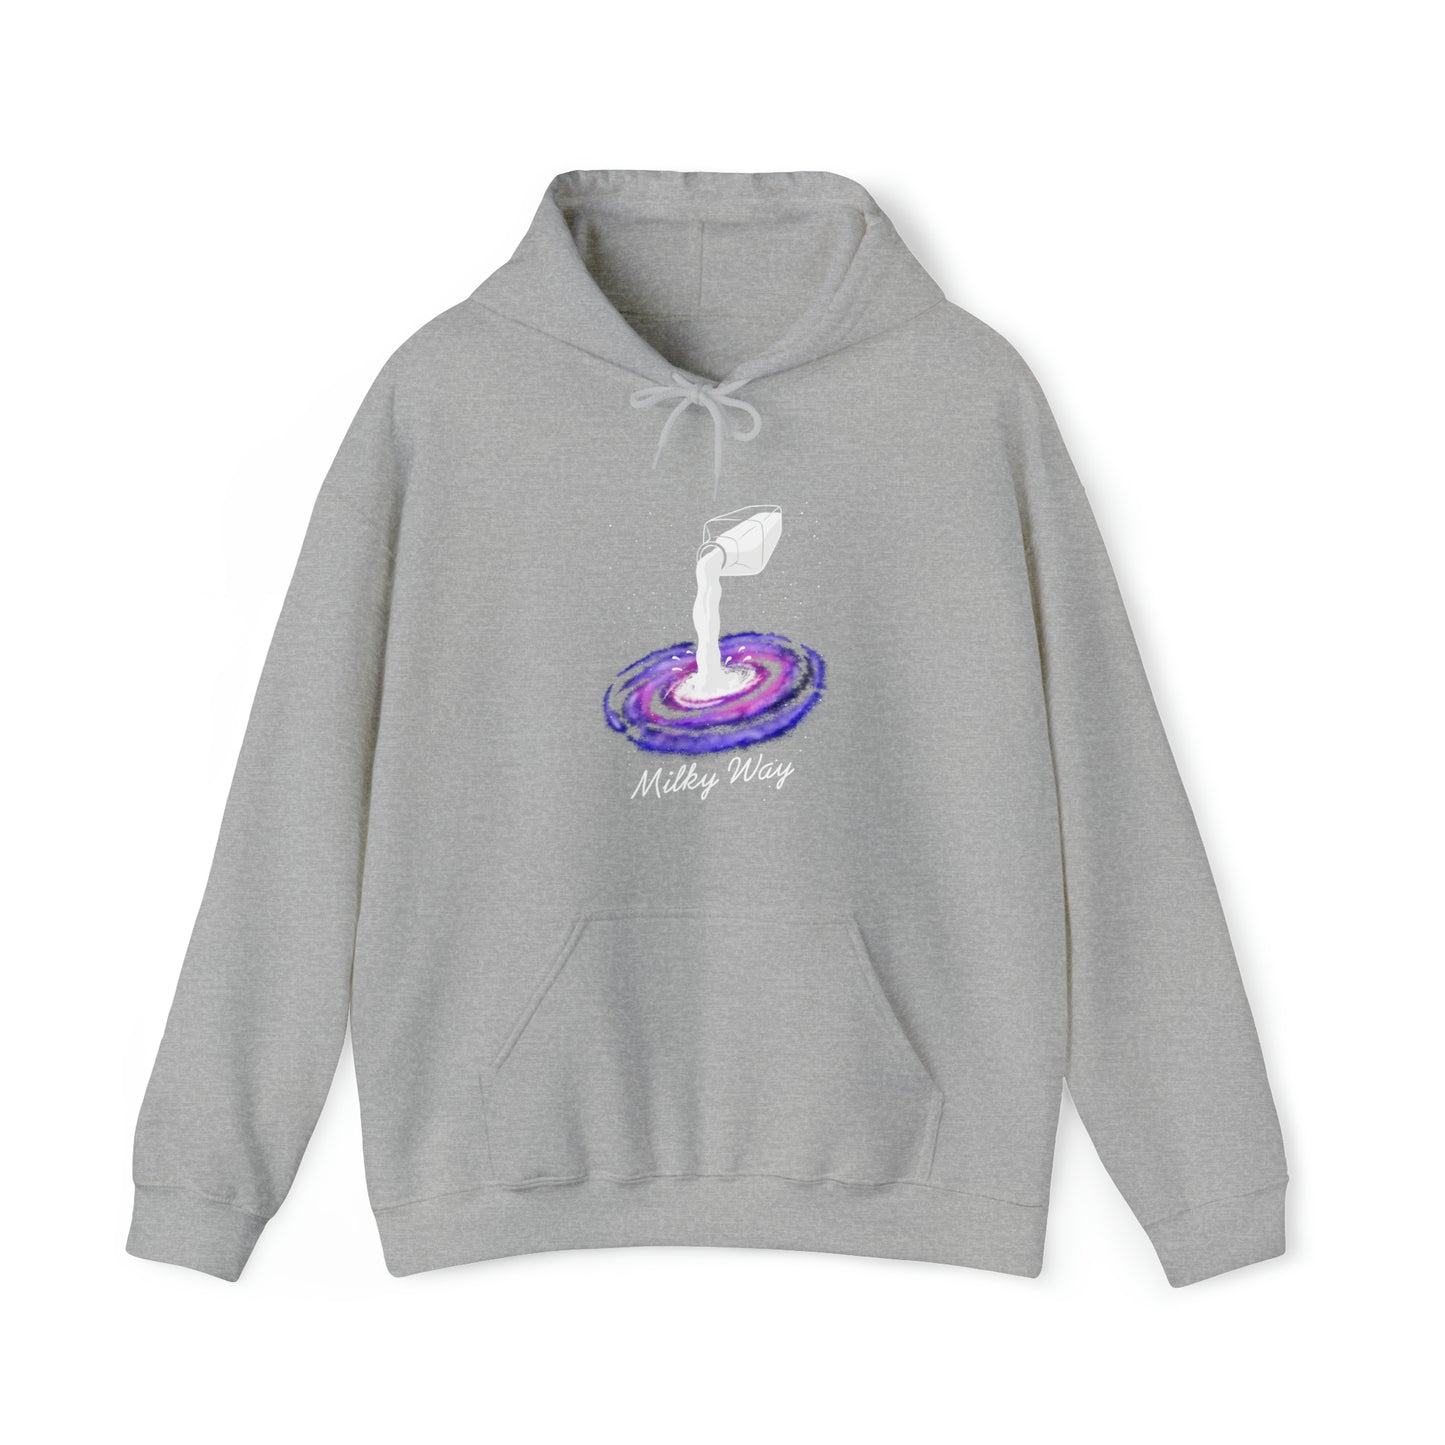 Custom Parody Hooded Sweatshirt, Milky Way design